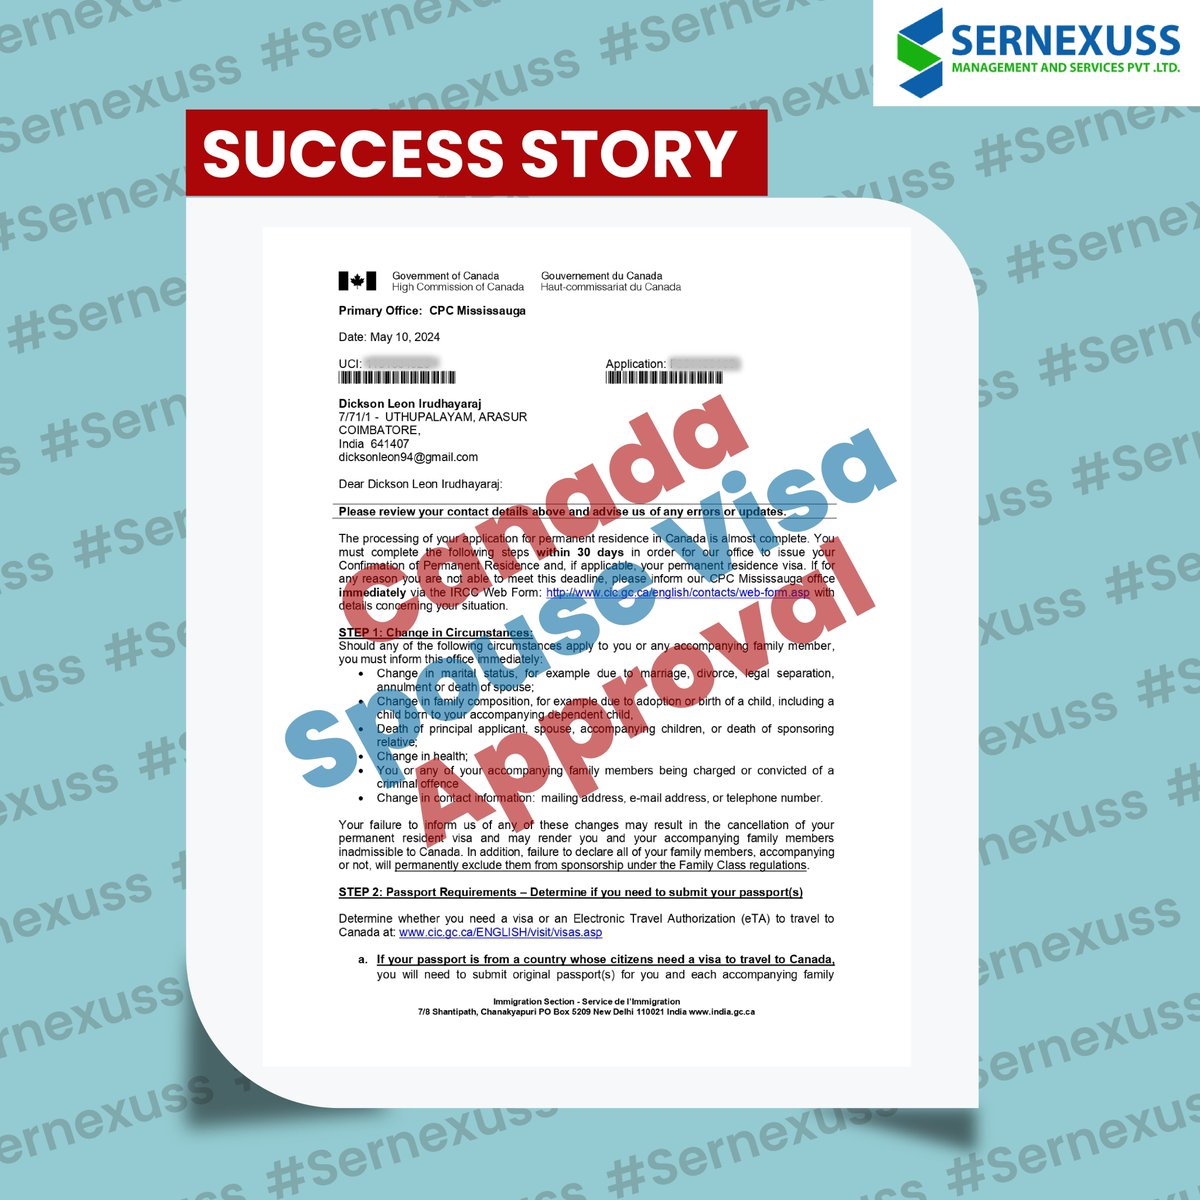 Congratulations, Dear Dickson Leon Irudhayaraj, on successfully obtaining a Canada Spouse Visa Approval. #happyclients #canadaspousevisa #success #spousevisa #sernexuss #sernexussimmigration